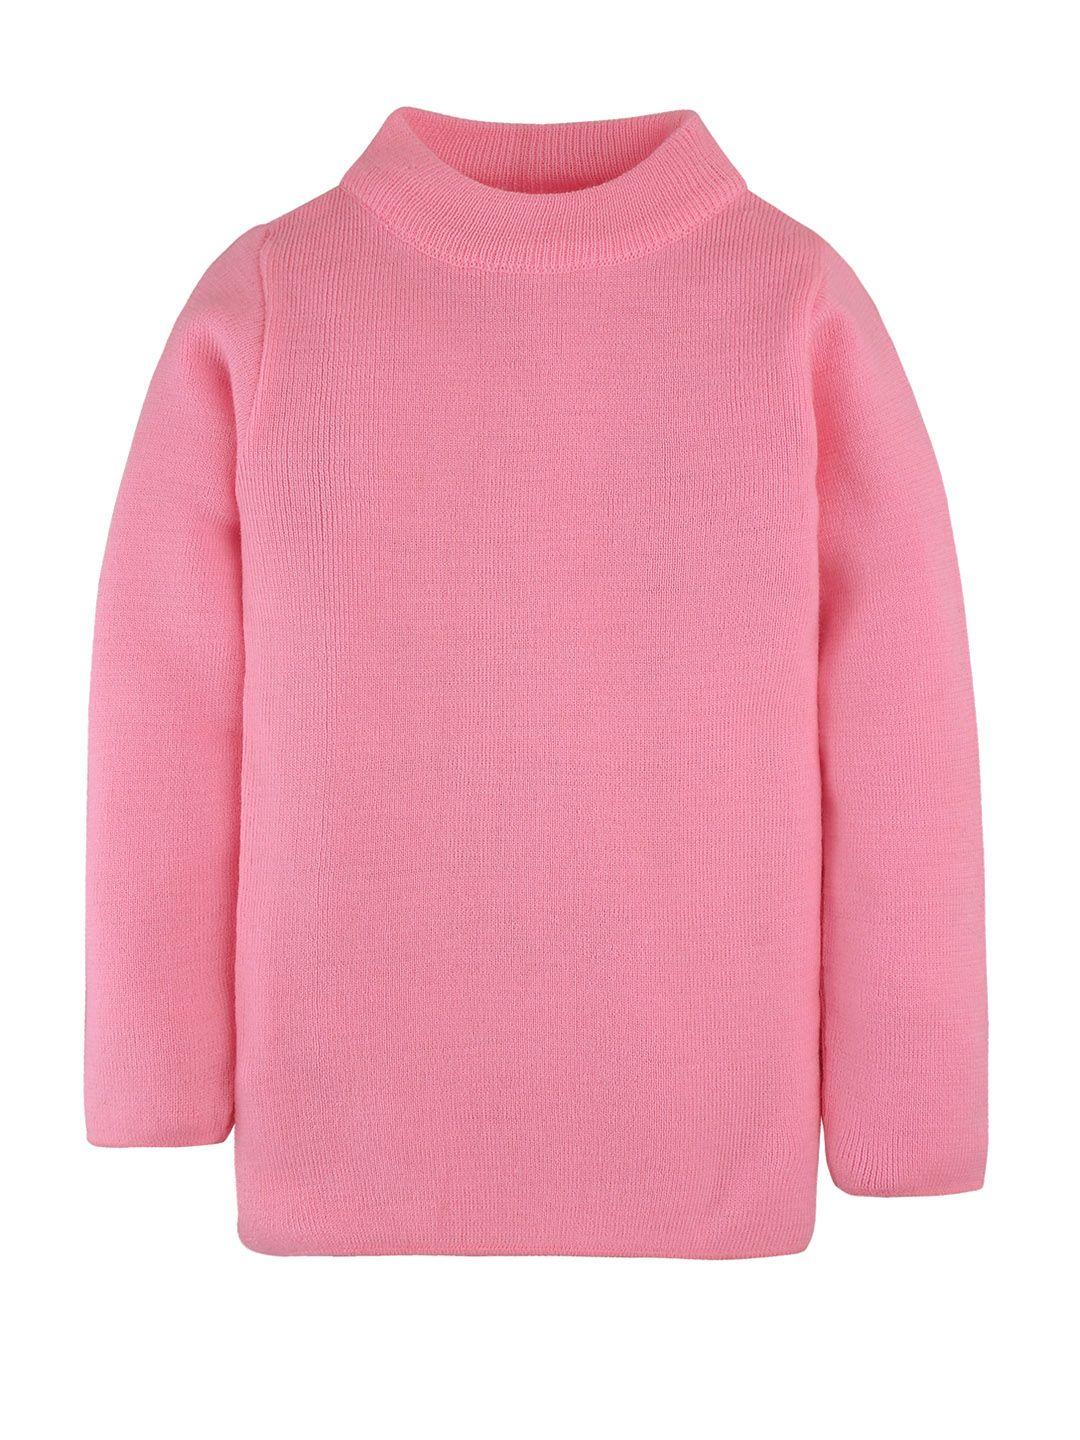 rvk kids pink solid sweater